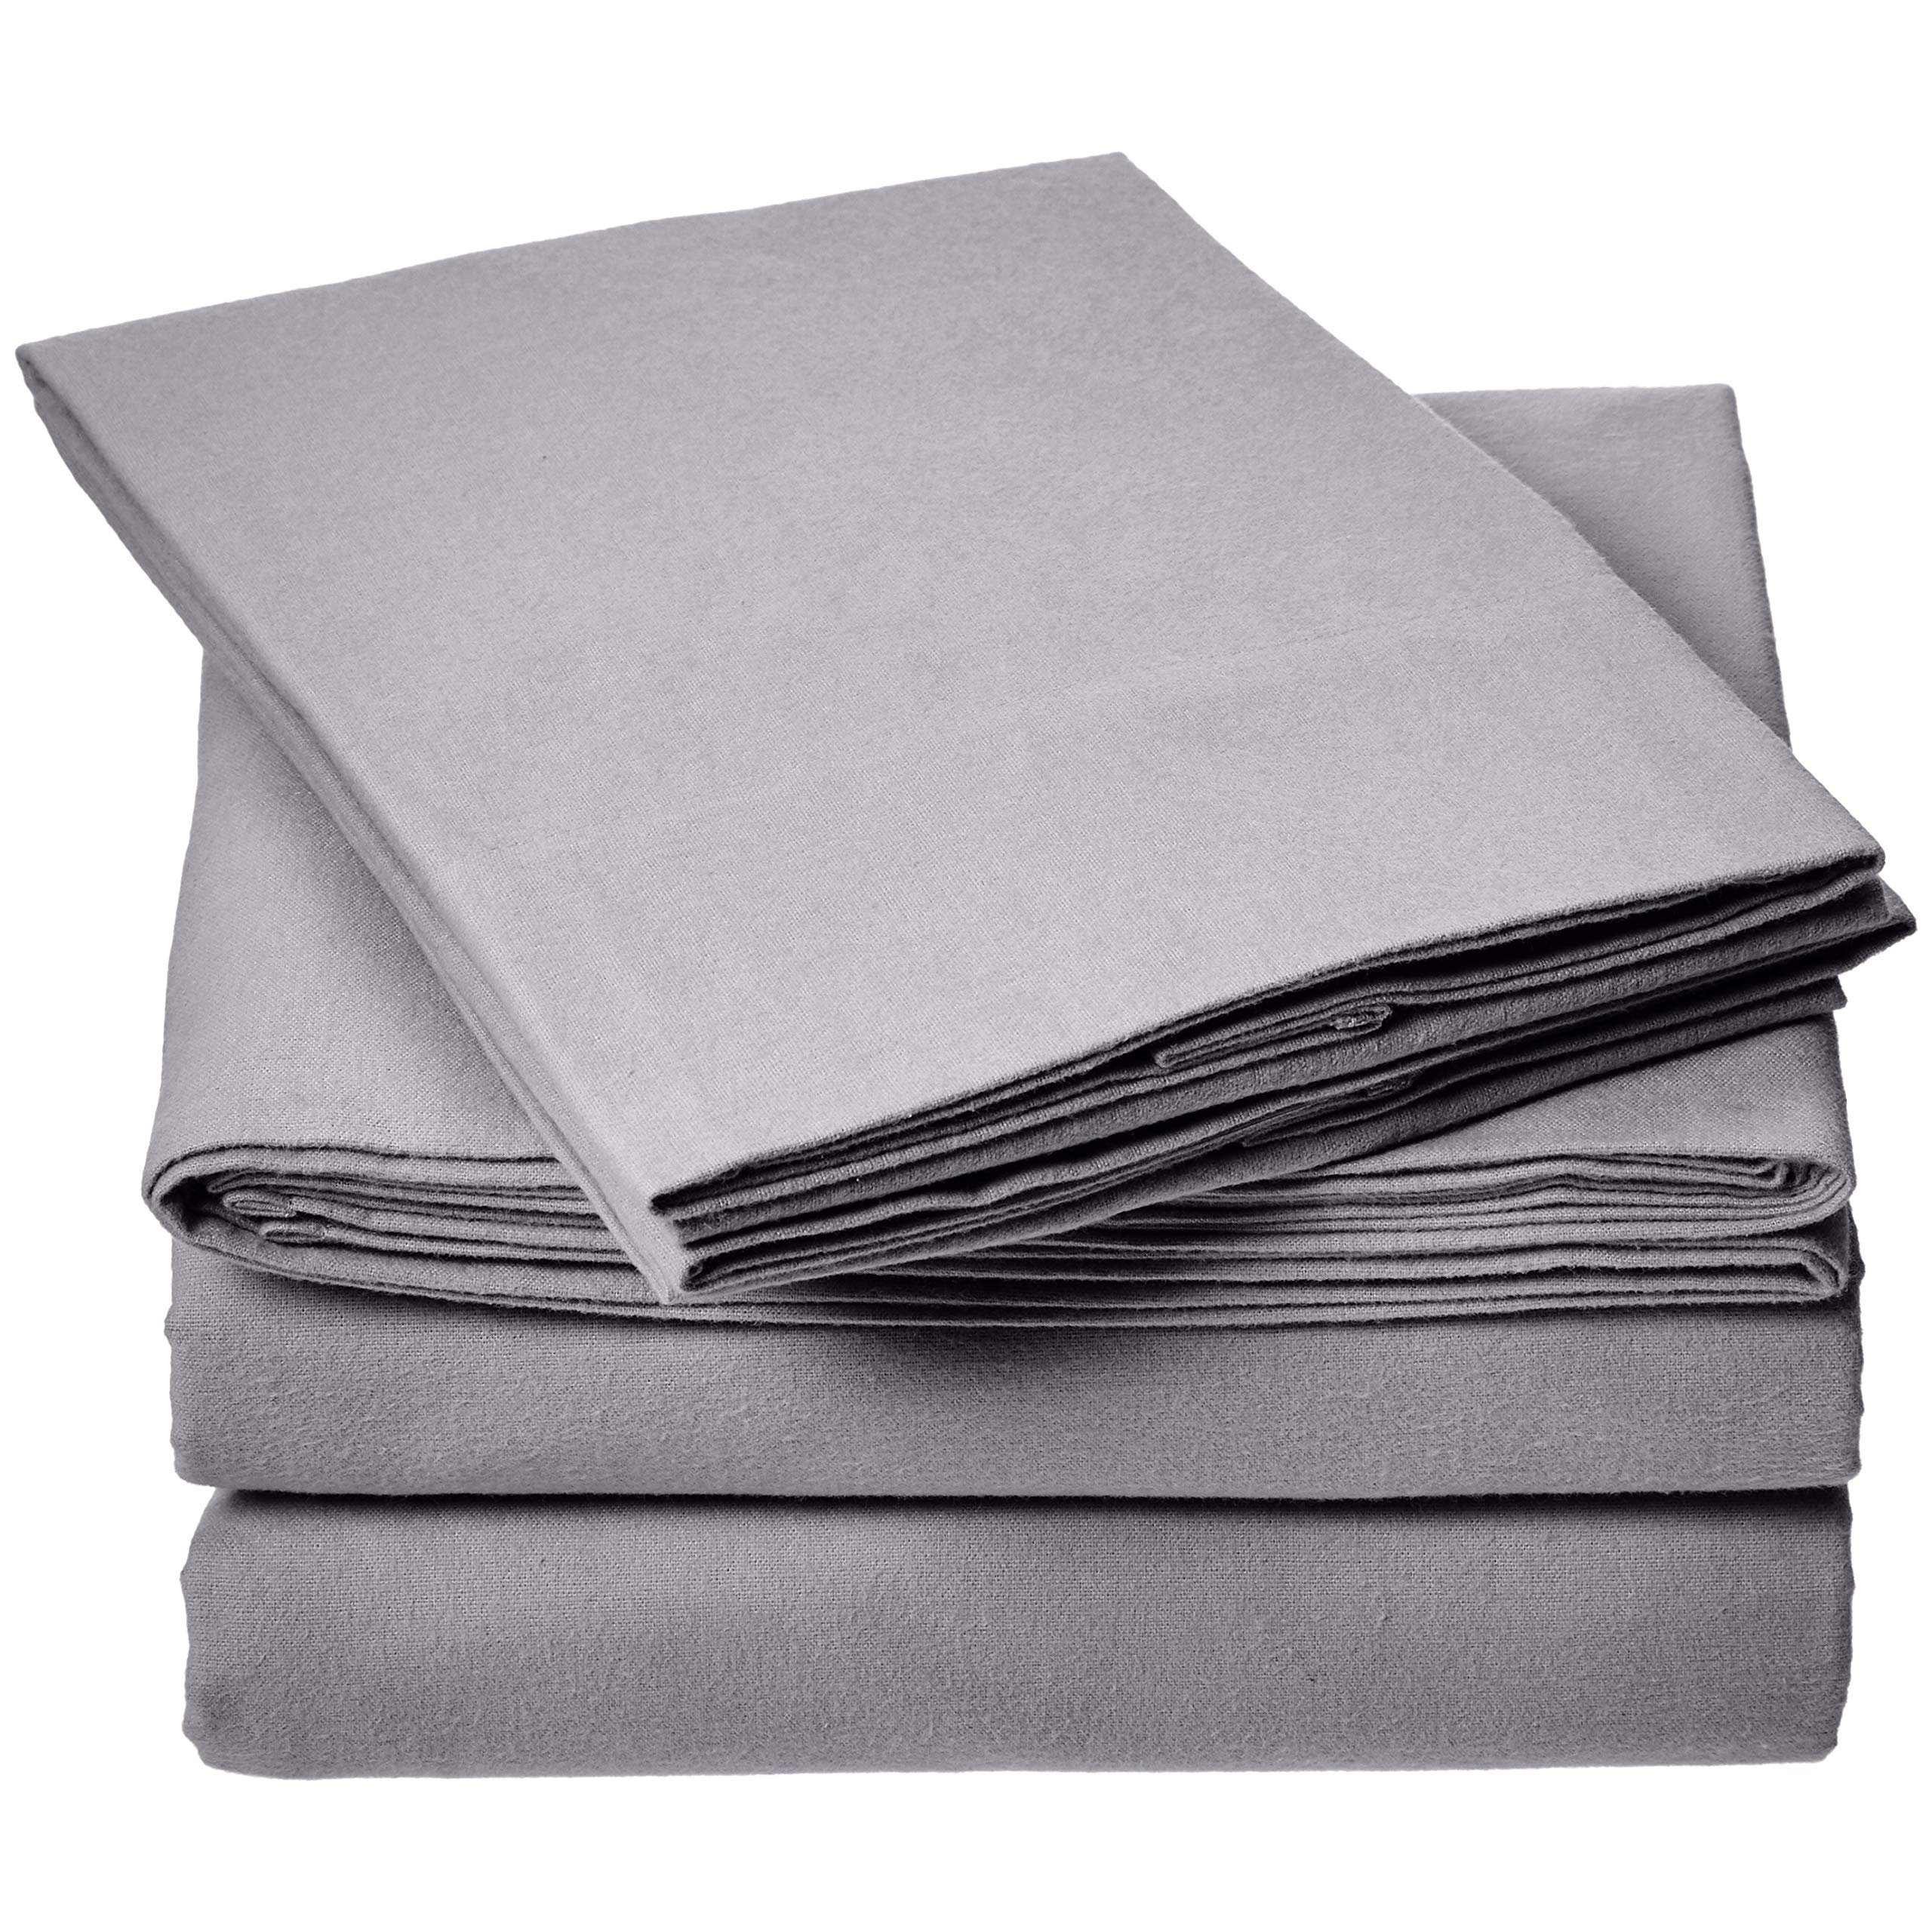 Book Cover Amazon Basics Everyday Flannel Bed Sheet Set - California King, Grey California King Grey